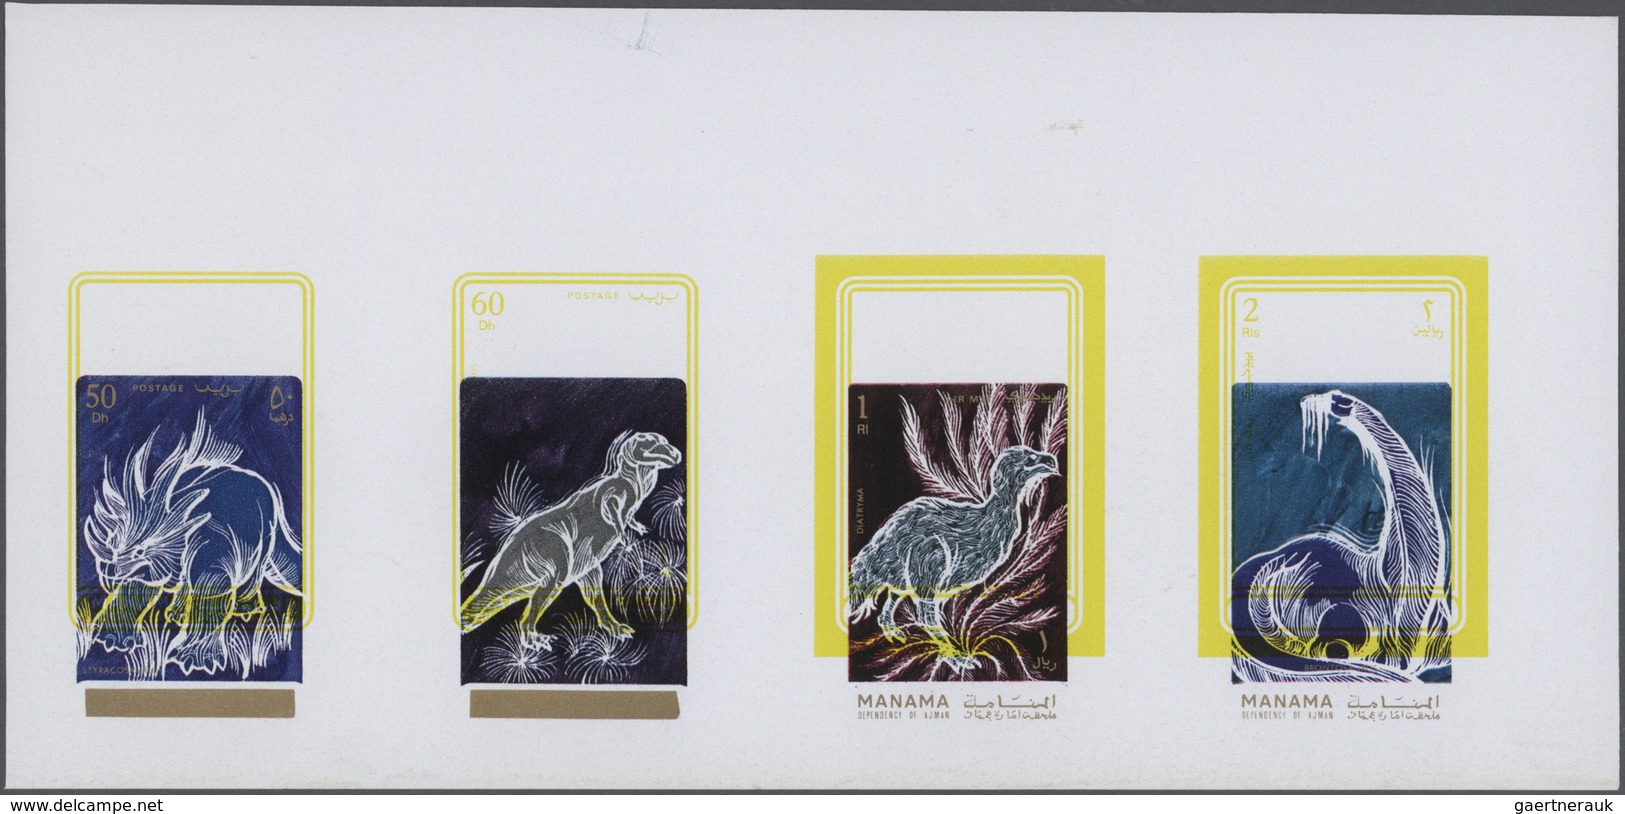 Naher Osten: 1967-1983: Large assortment of artworks/drawings + overlays (unique!), final artworks,